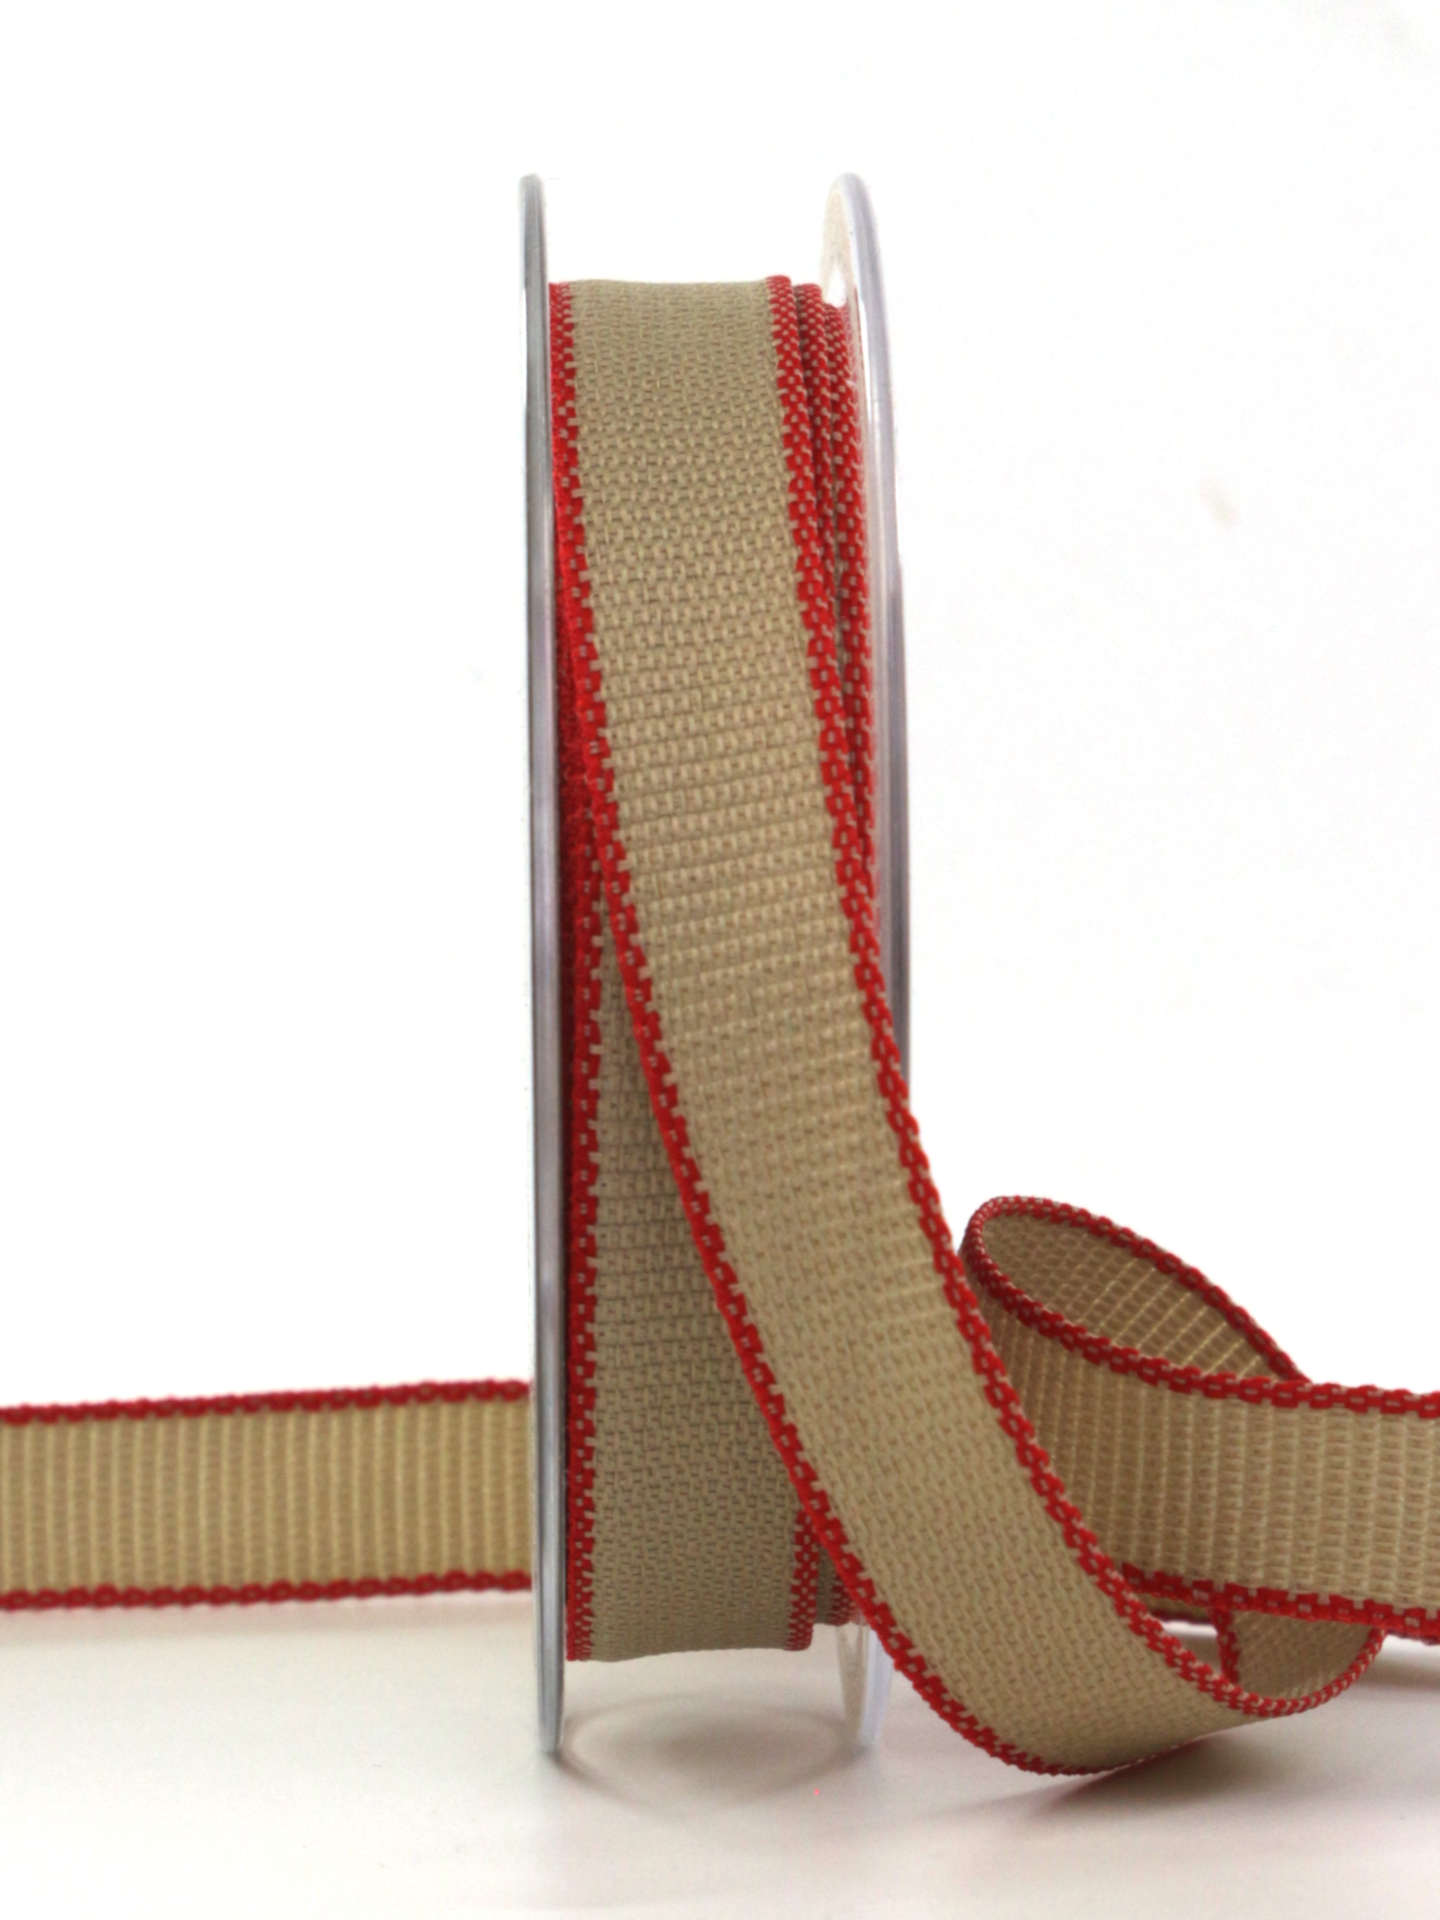 Leinenband, waschbar, rot, 15 mm breit, 15 m Rolle - geschenkband, geschenkband-einfarbig